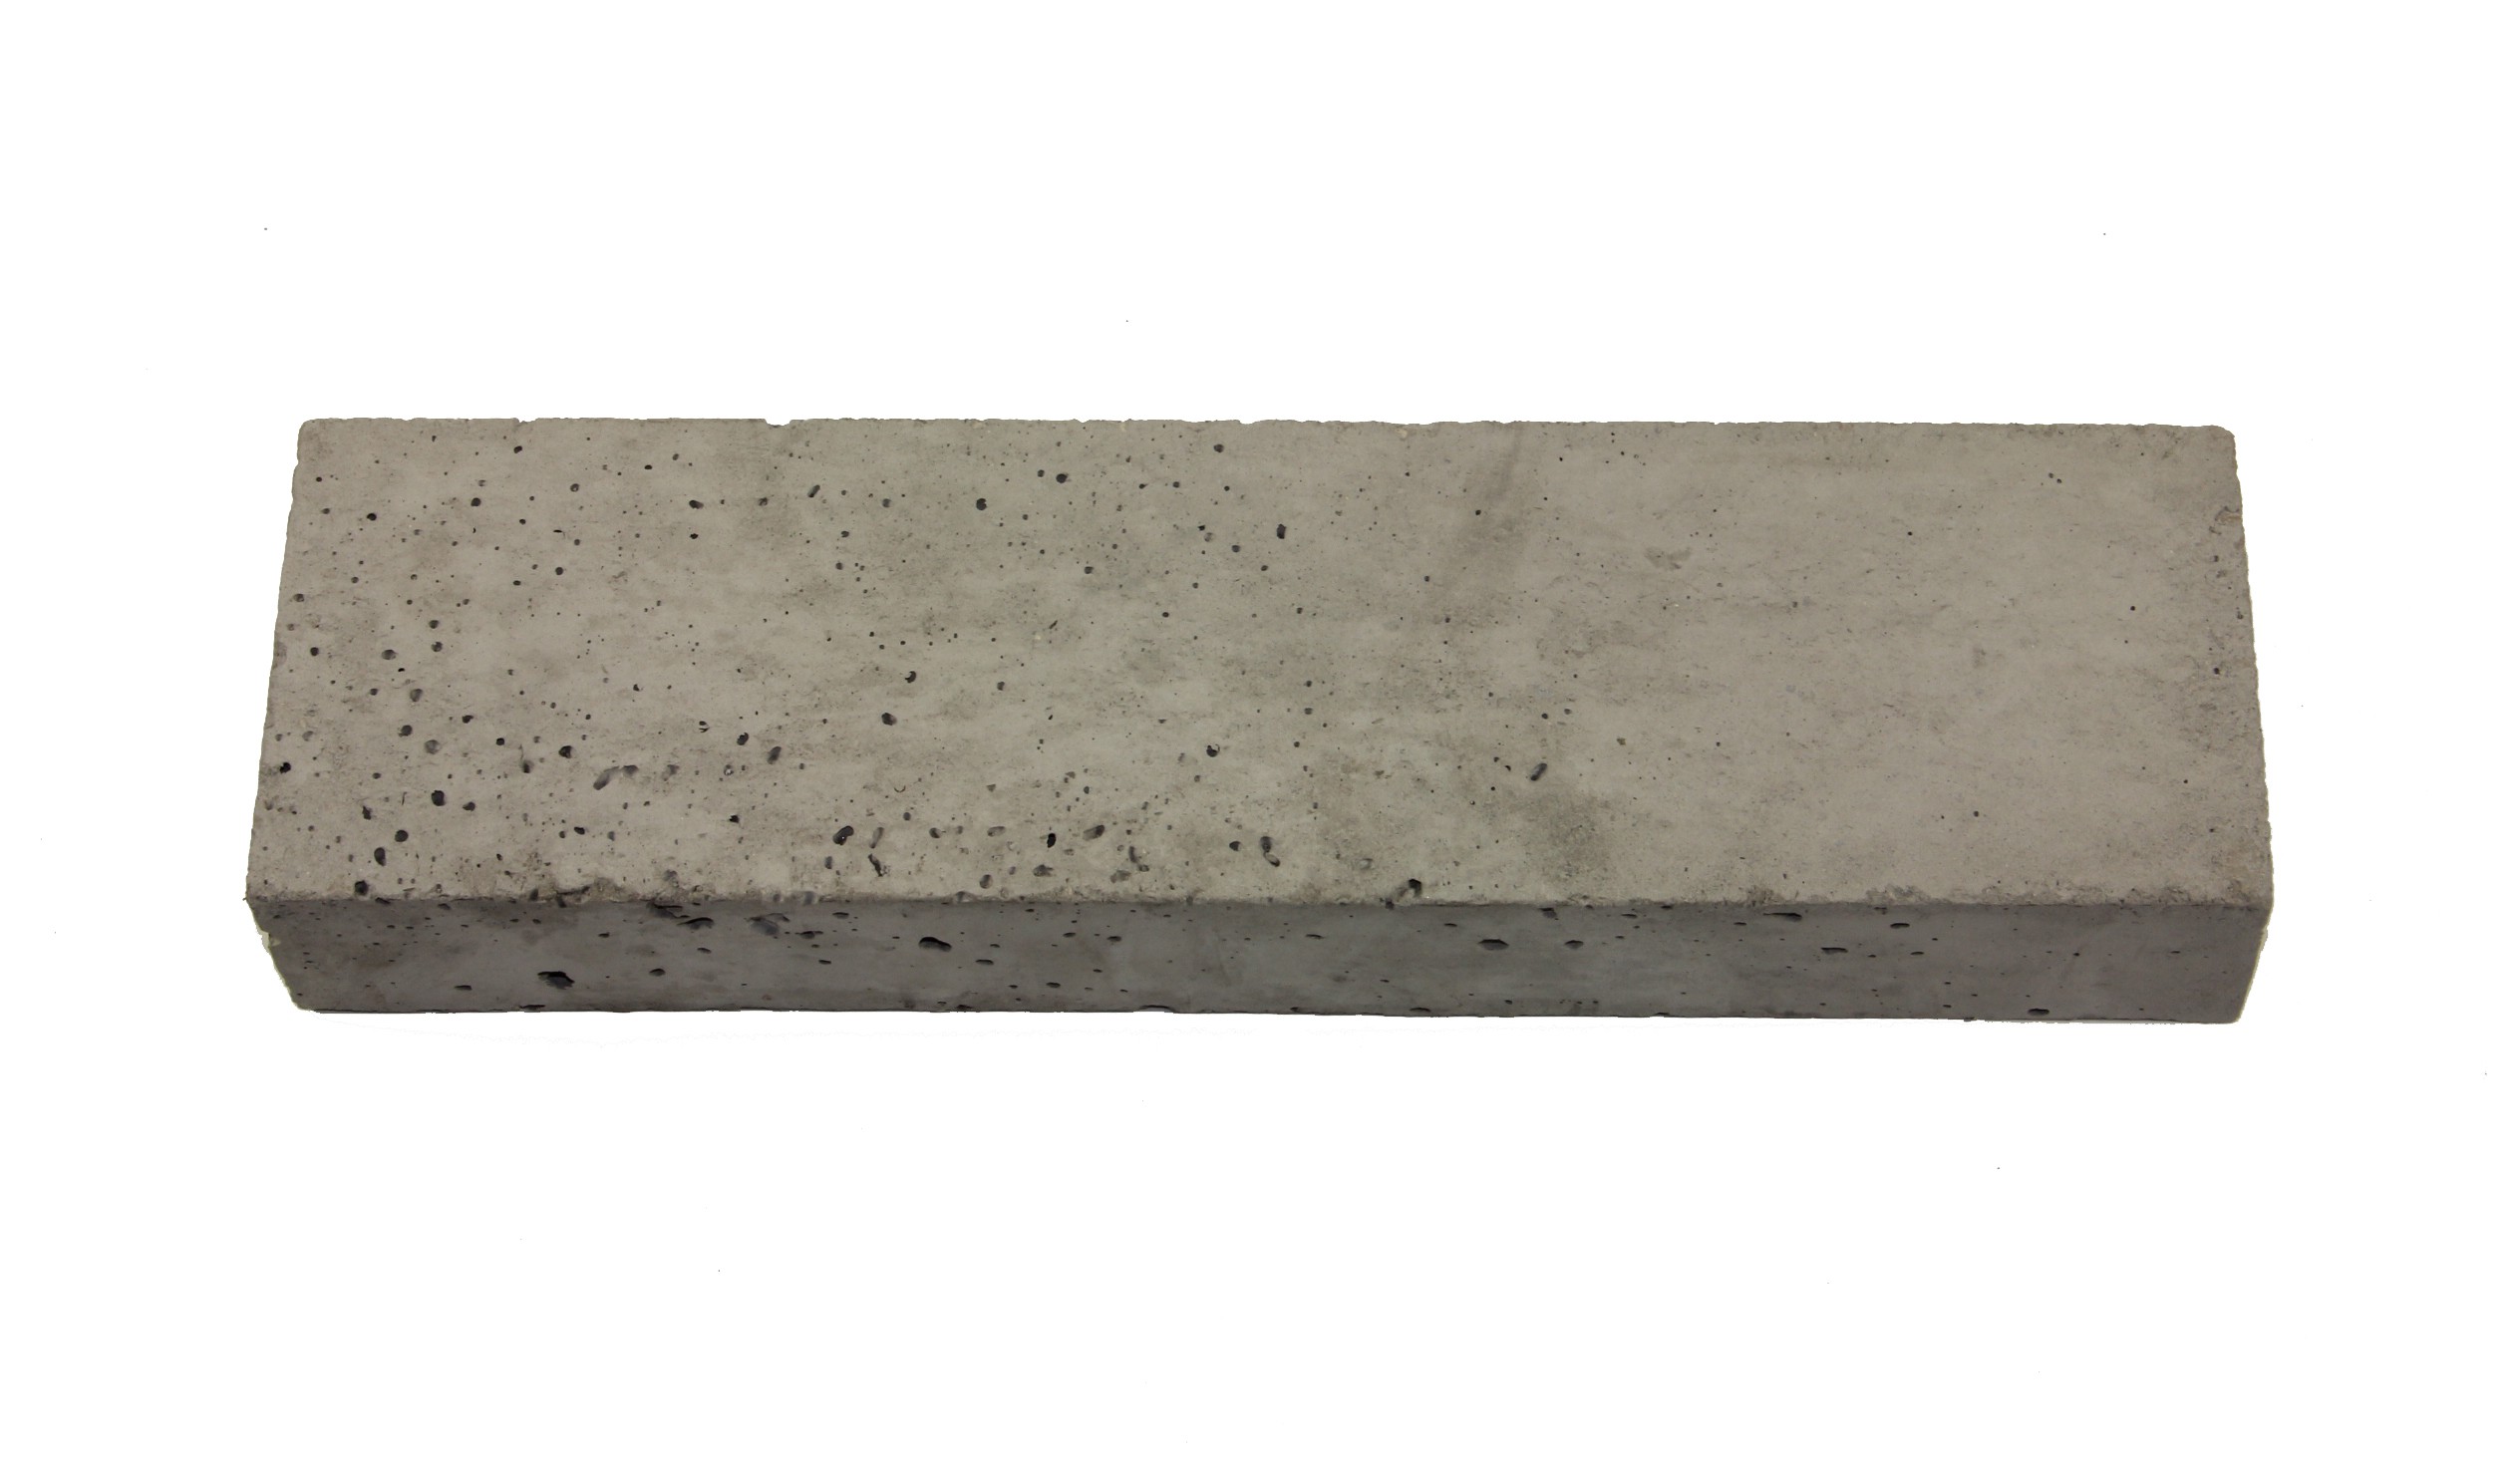 Flue gas circulation stone, 50x95x325